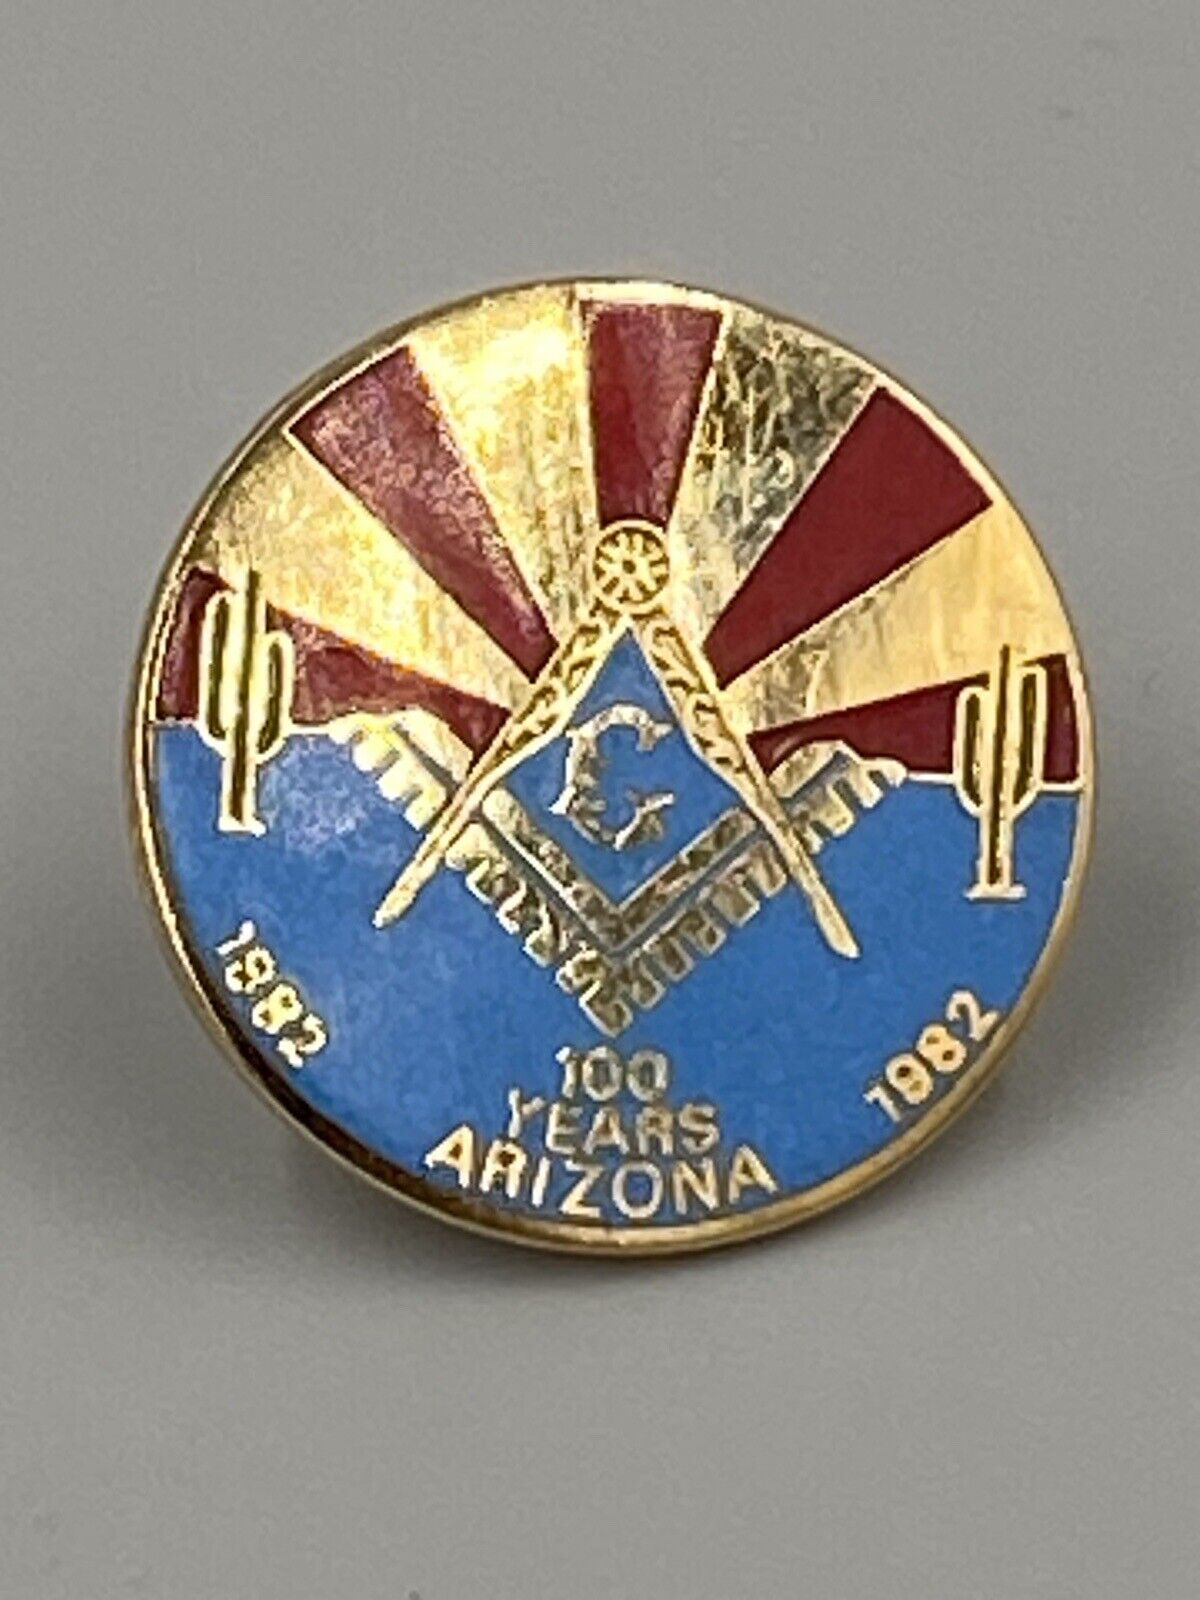 Vintage 1982 Masonic Lodge Years Arizona Anniversary Lapel Pin Badge